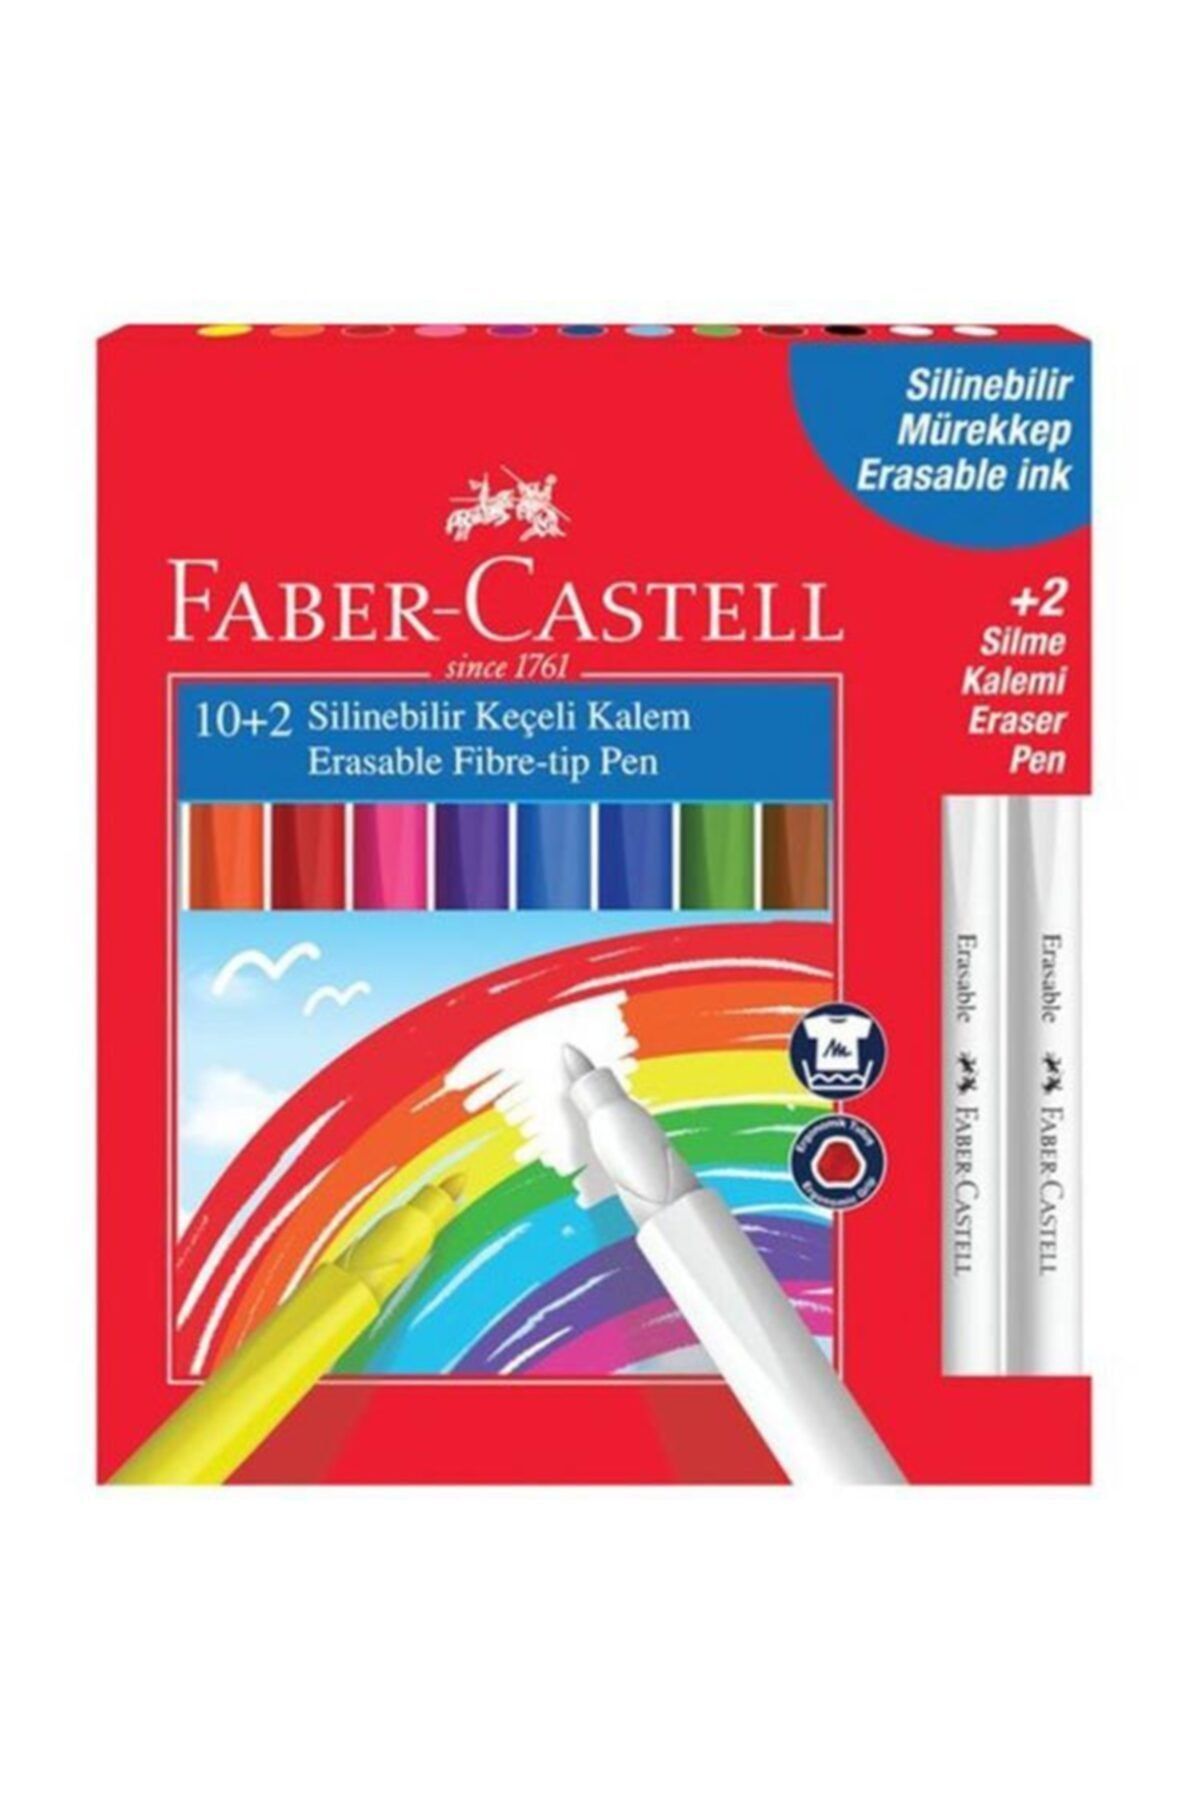 Faber Castell Silinebilir Keçeli Kalem 10+2 Silme Kalemi